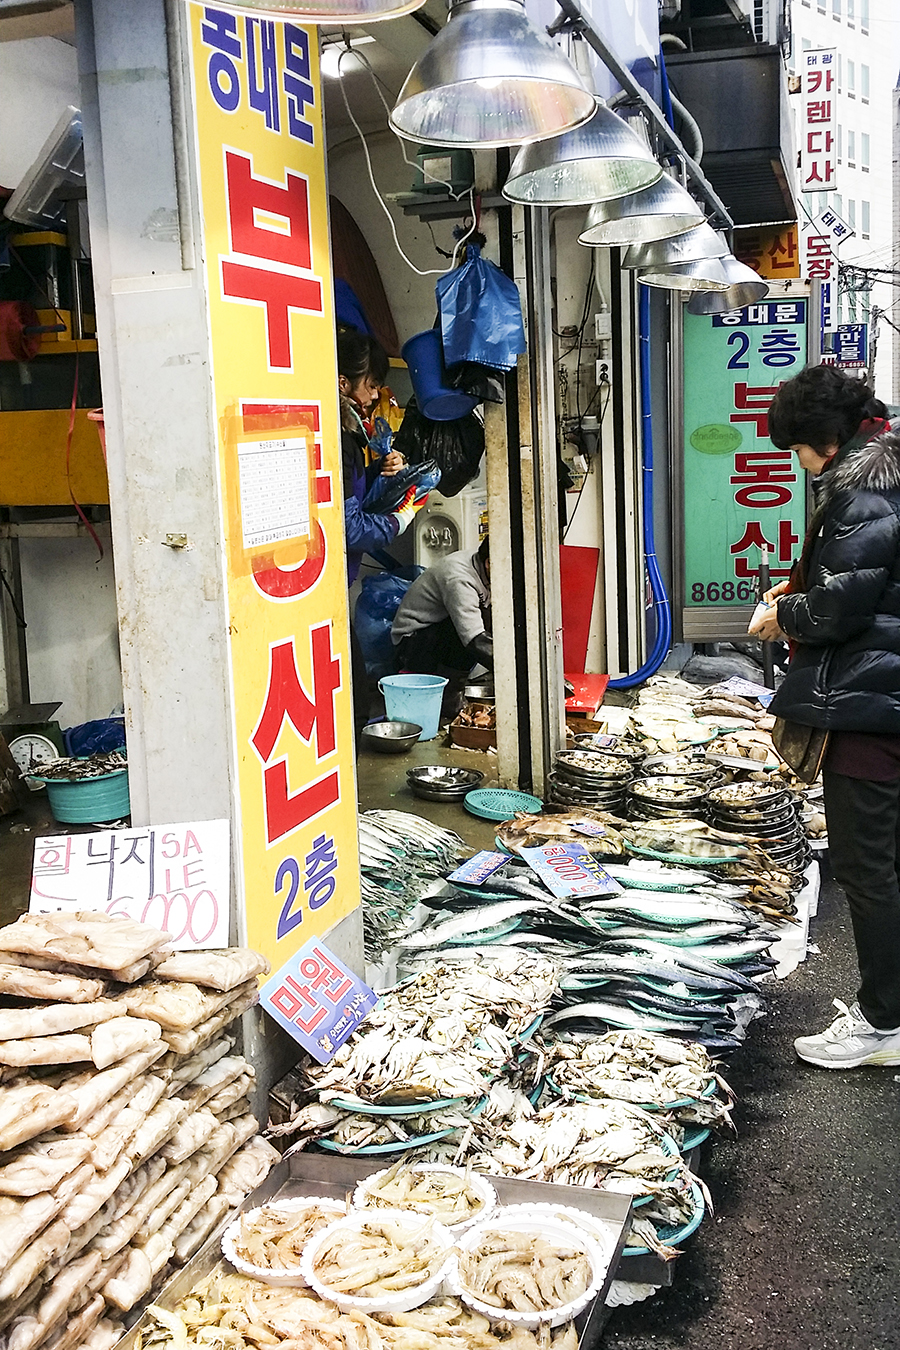 Fish store on the streets of Dongdaemun, Seoul, South Korea.